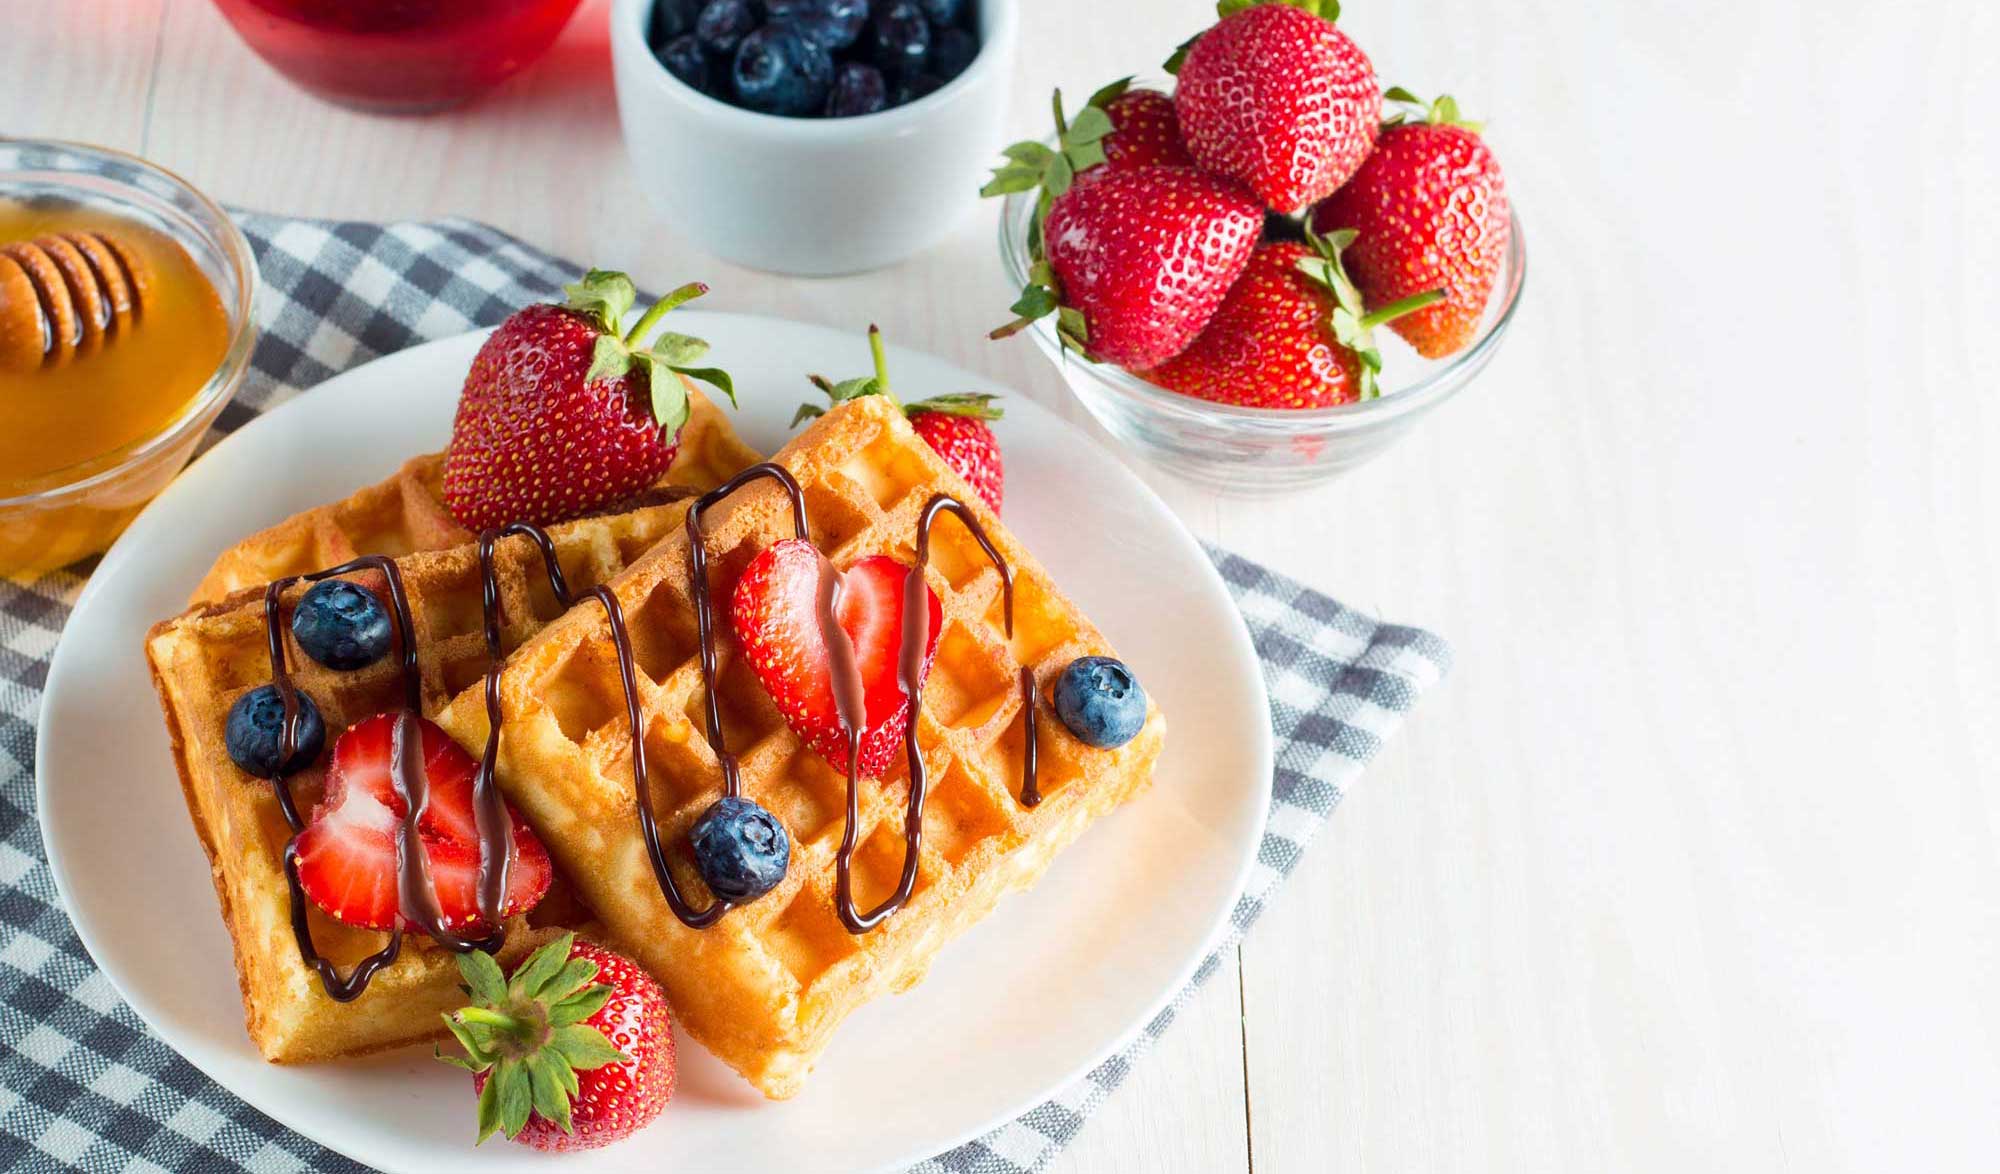 strawberry blueberry waffle with Nutella